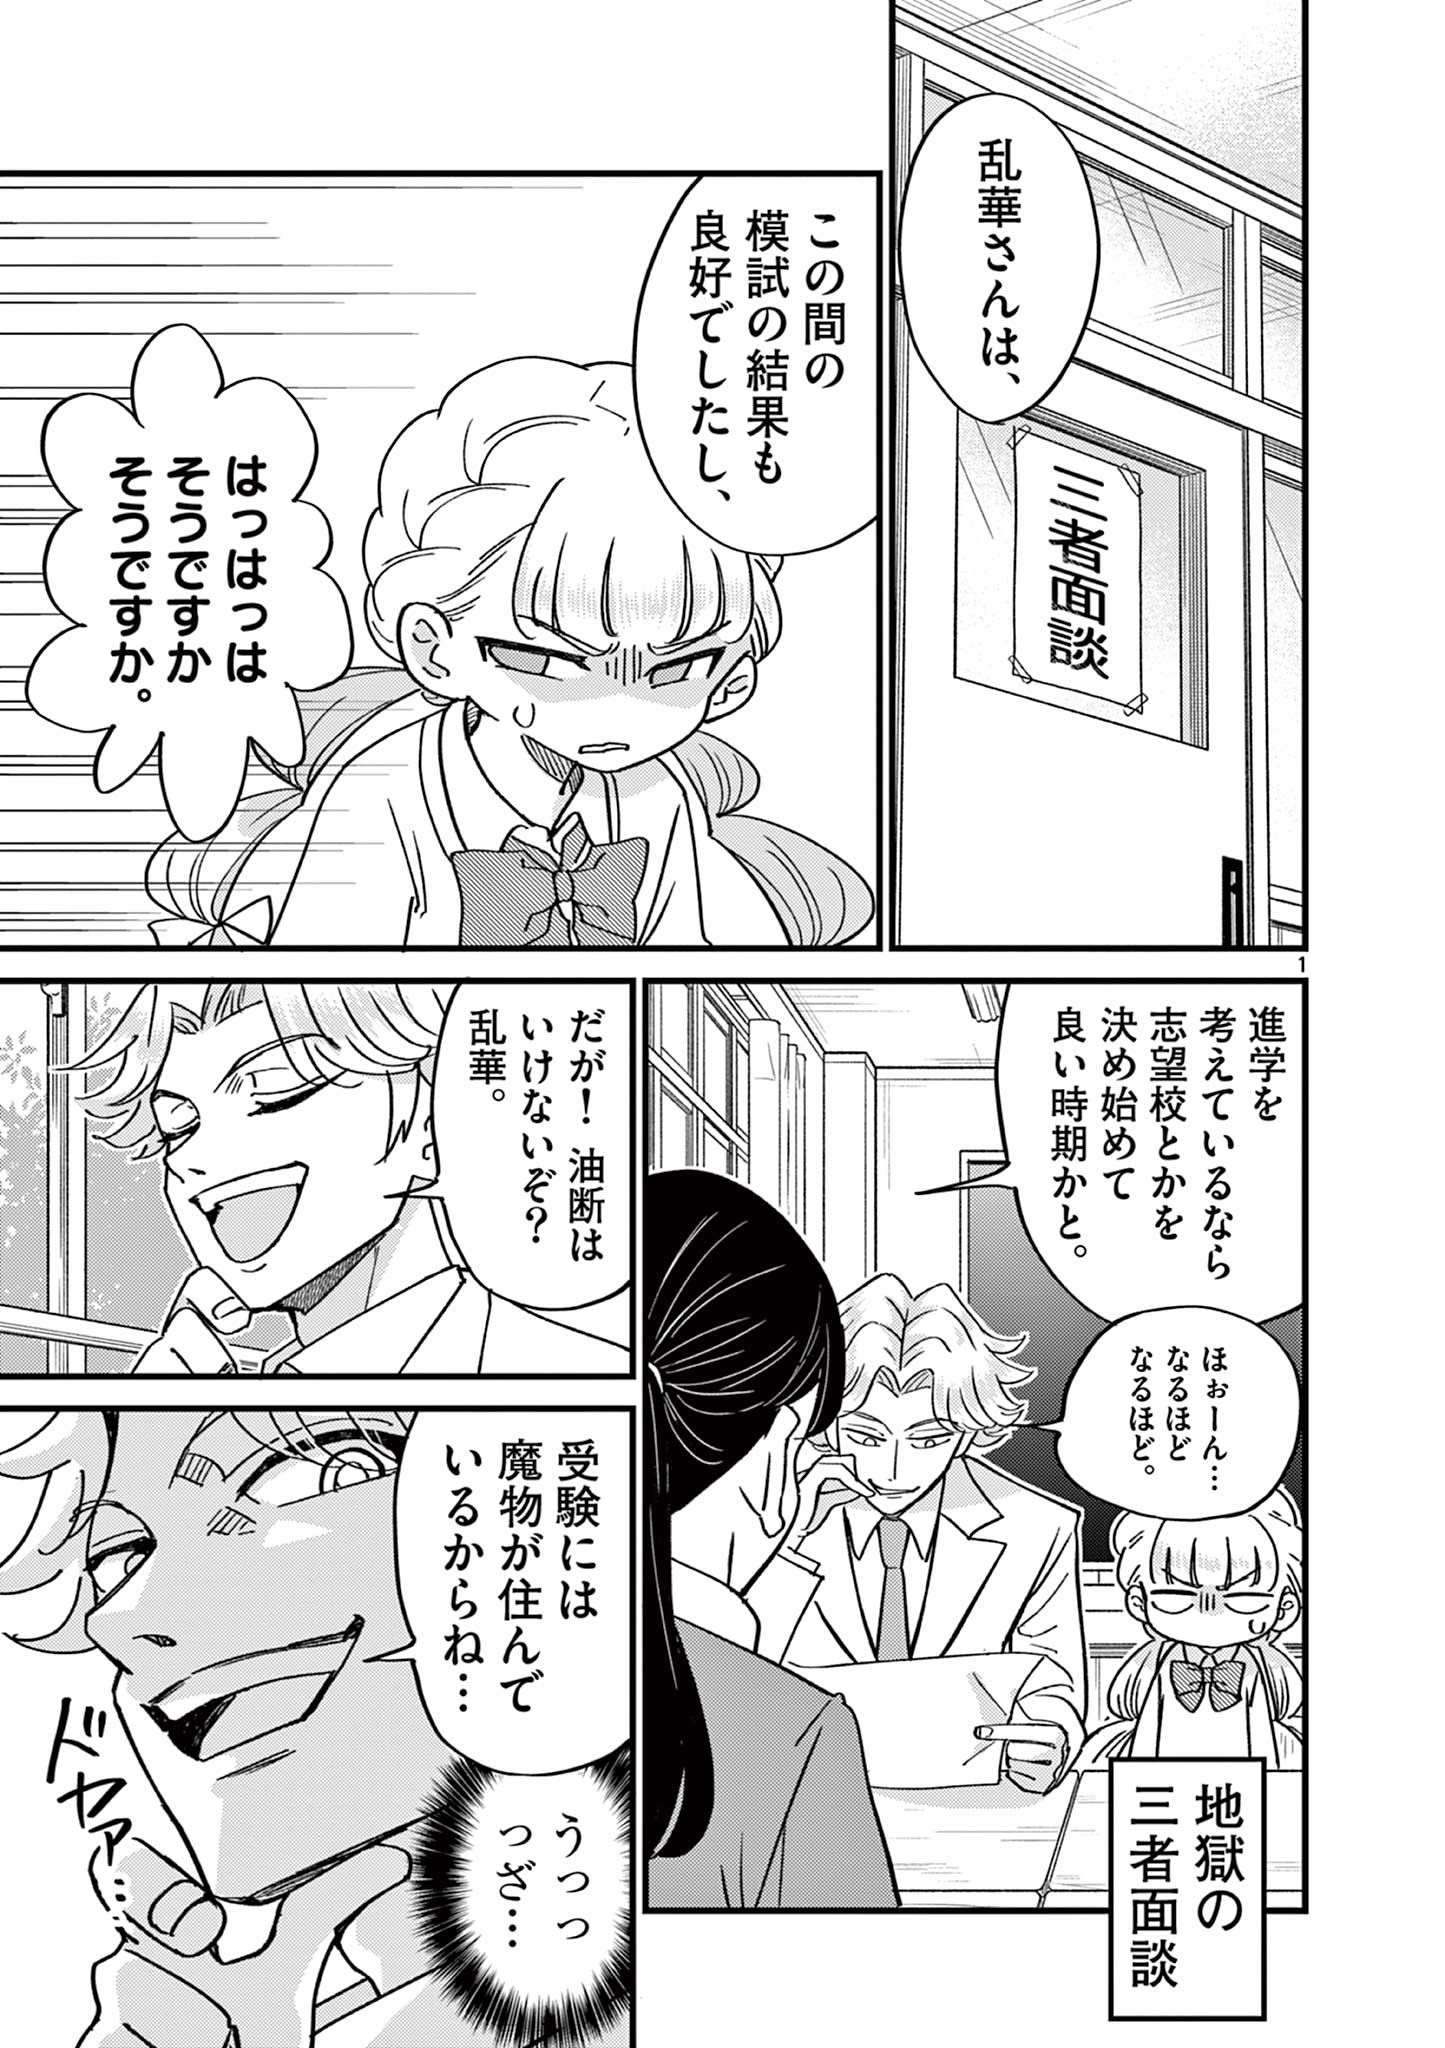 Ranka-chan wa Bitch ni Naritai - Chapter 20 - Page 1